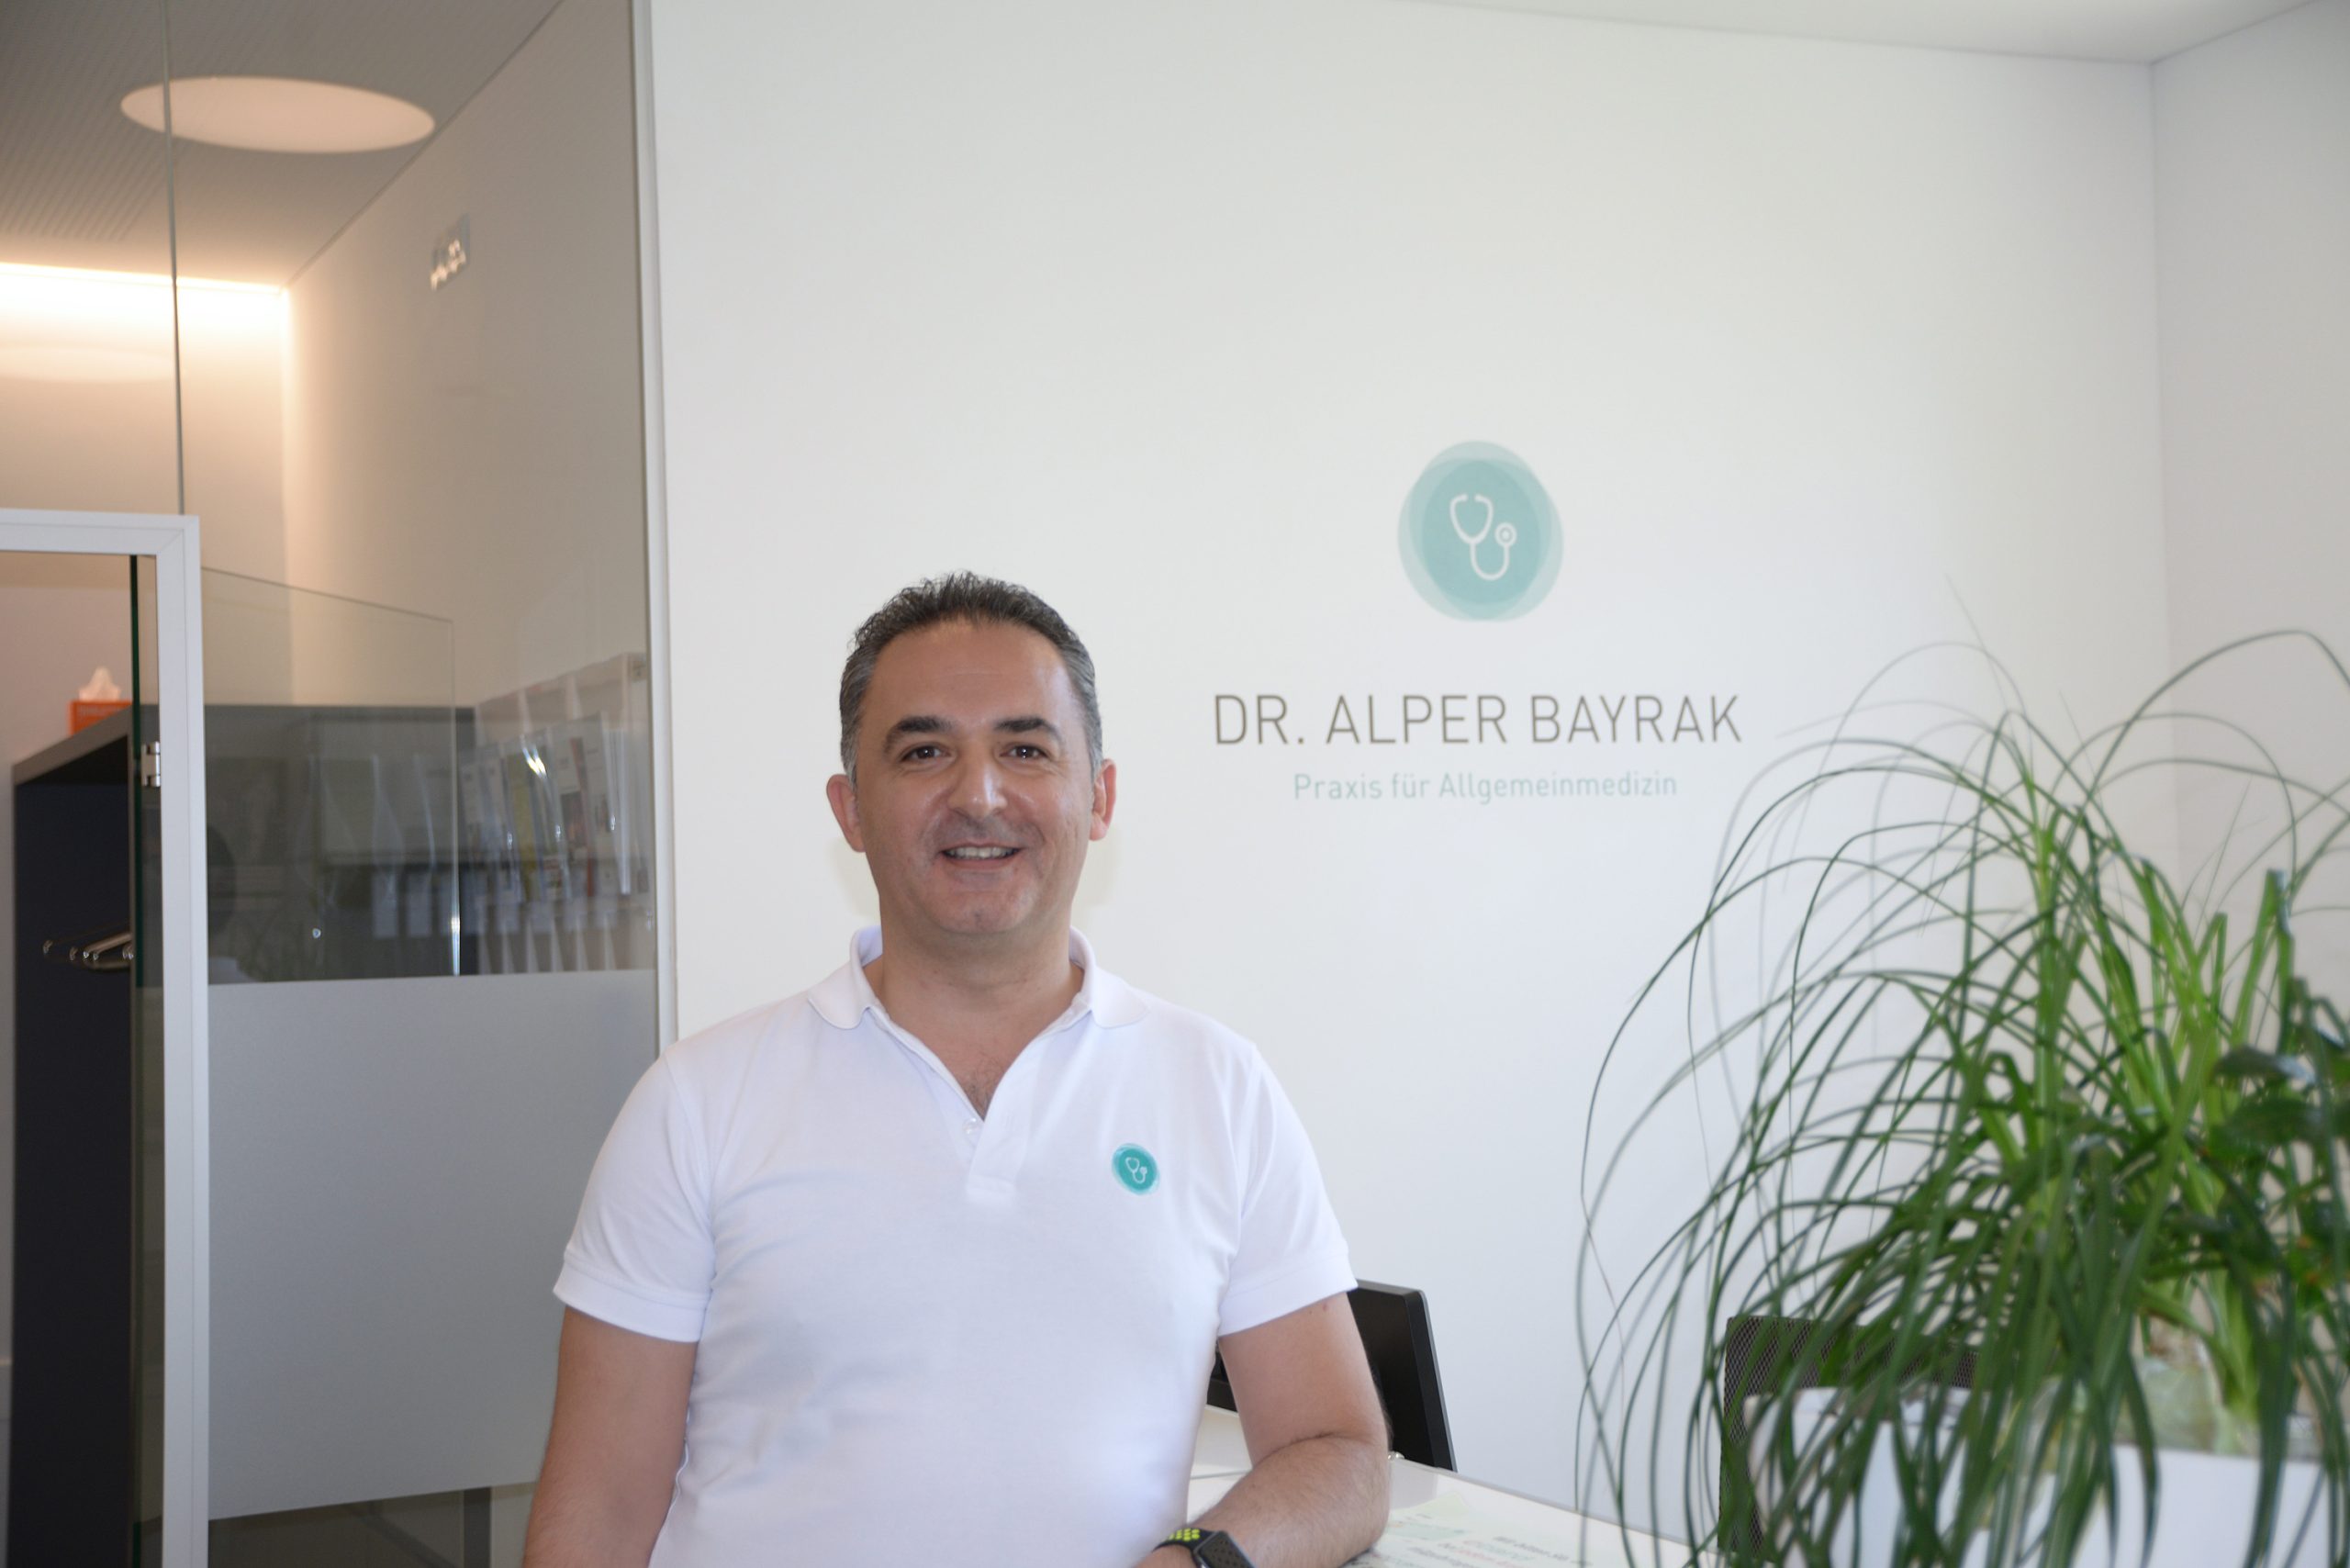 Dr. Alper Bayrak